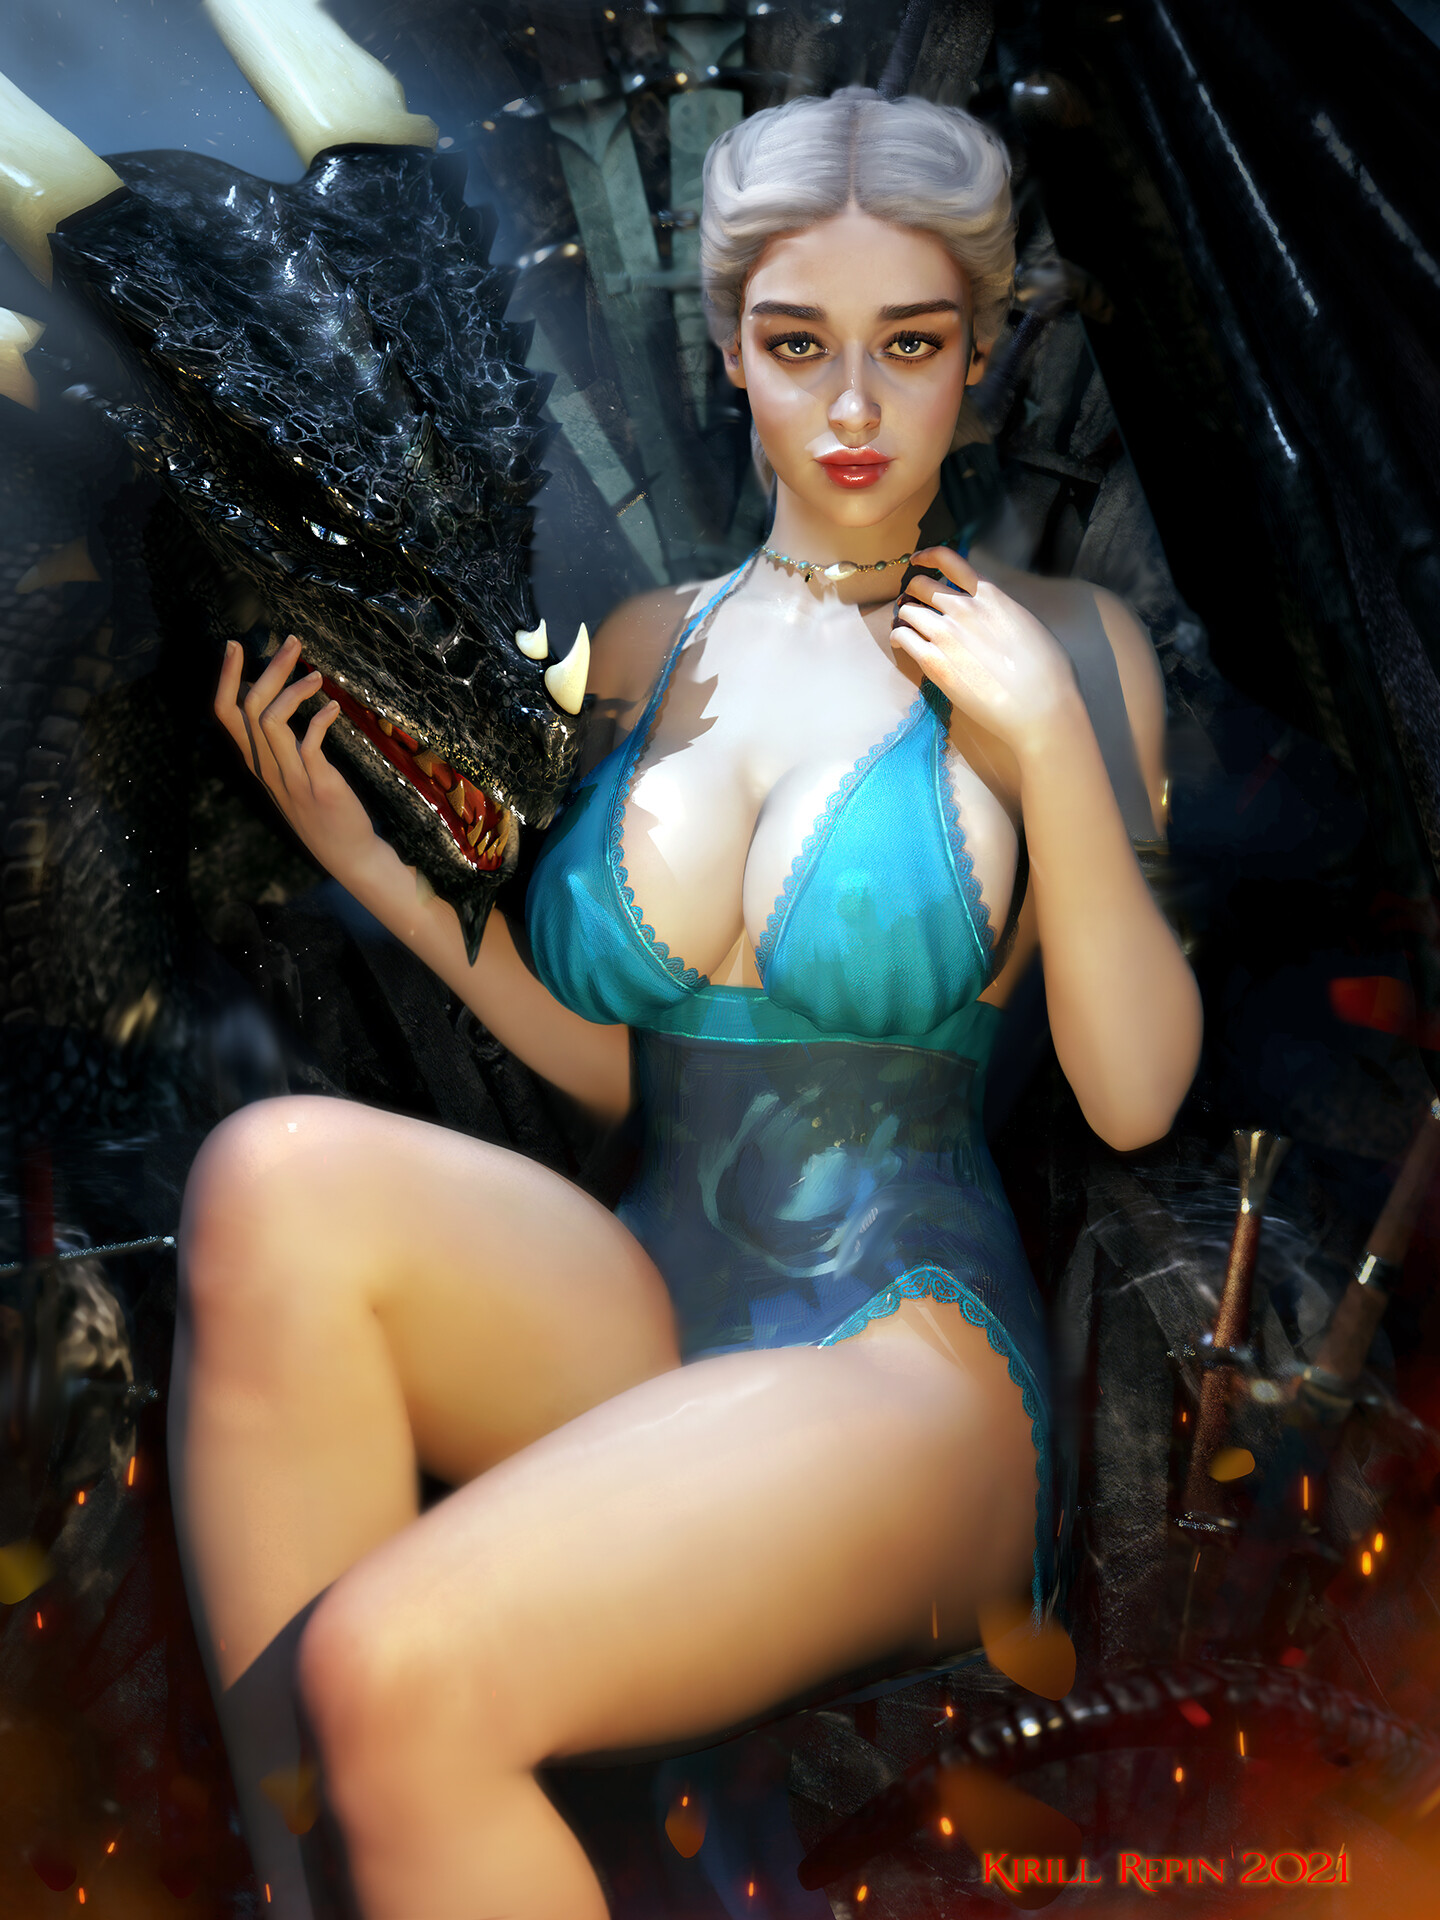 General 1440x1920 Kirill Repin women Daenerys Targaryen Game of Thrones portrait display watermarked digital art 2021 (year)